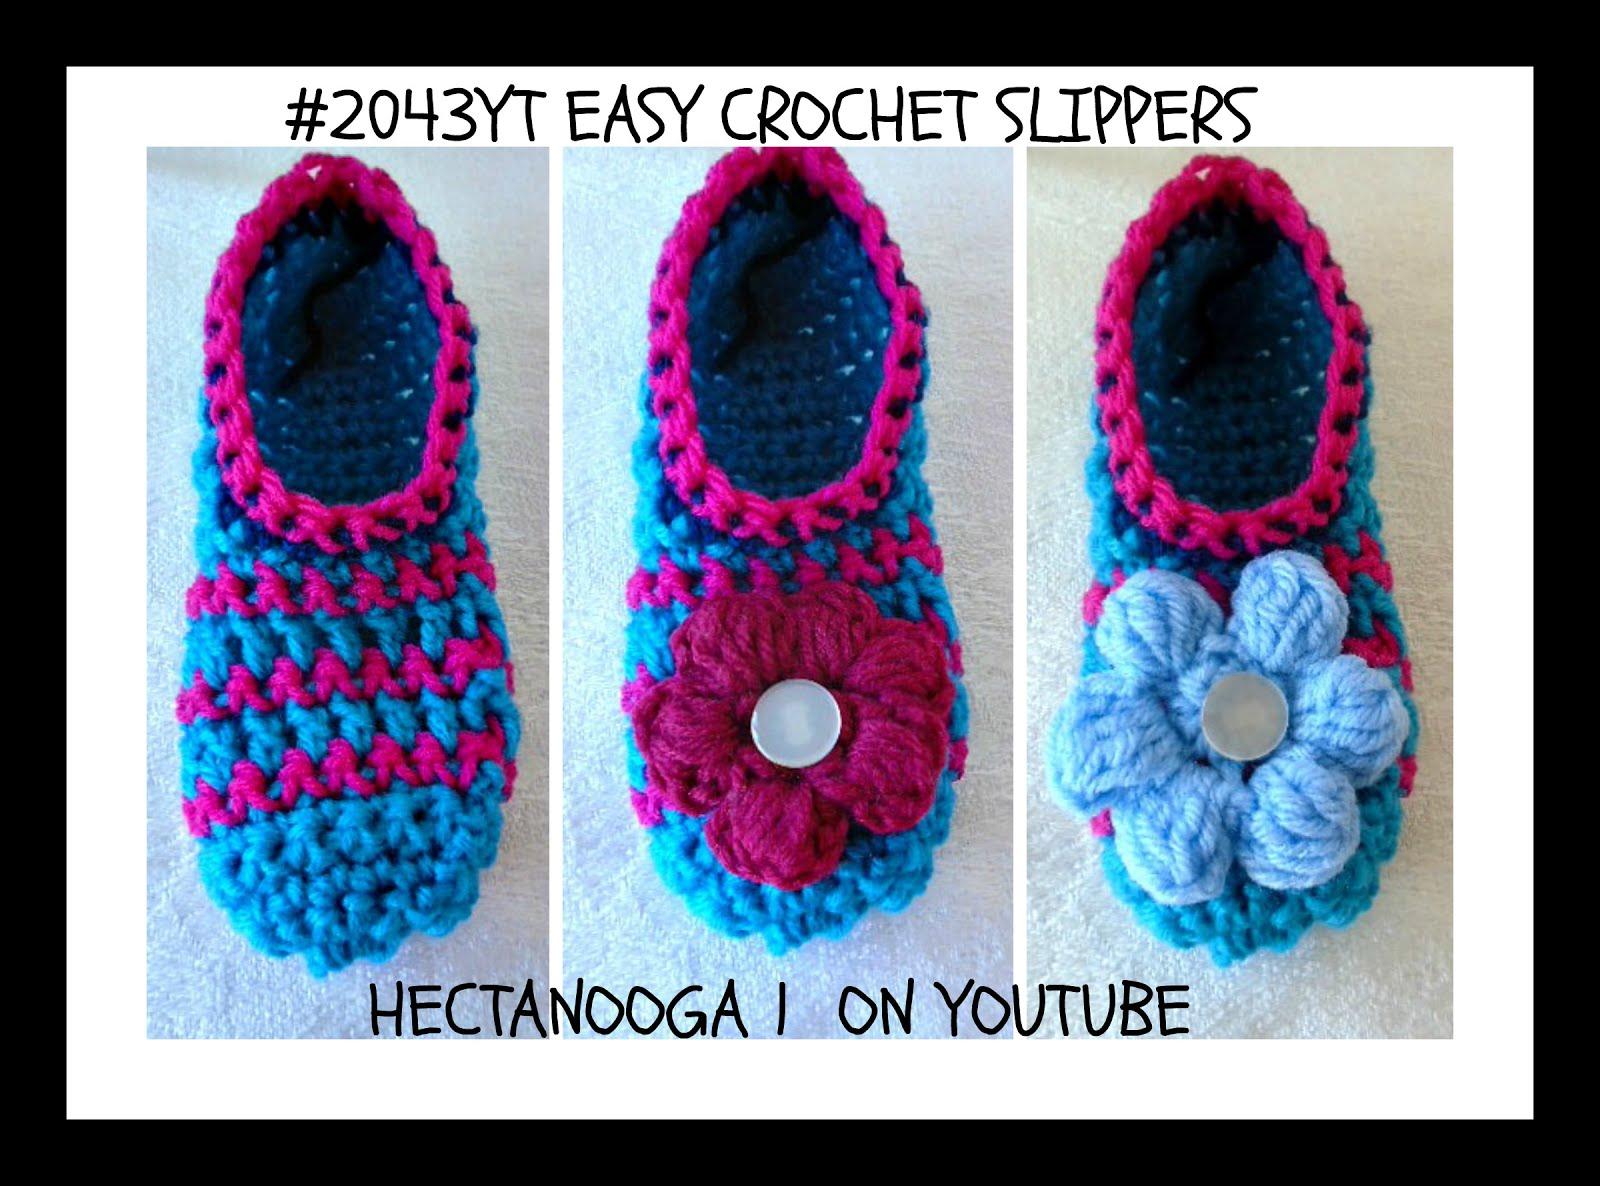 Crochet Slipper Patterns Hectanooga Patterns Free Crochet Pattern 2043yt Easy Crochet